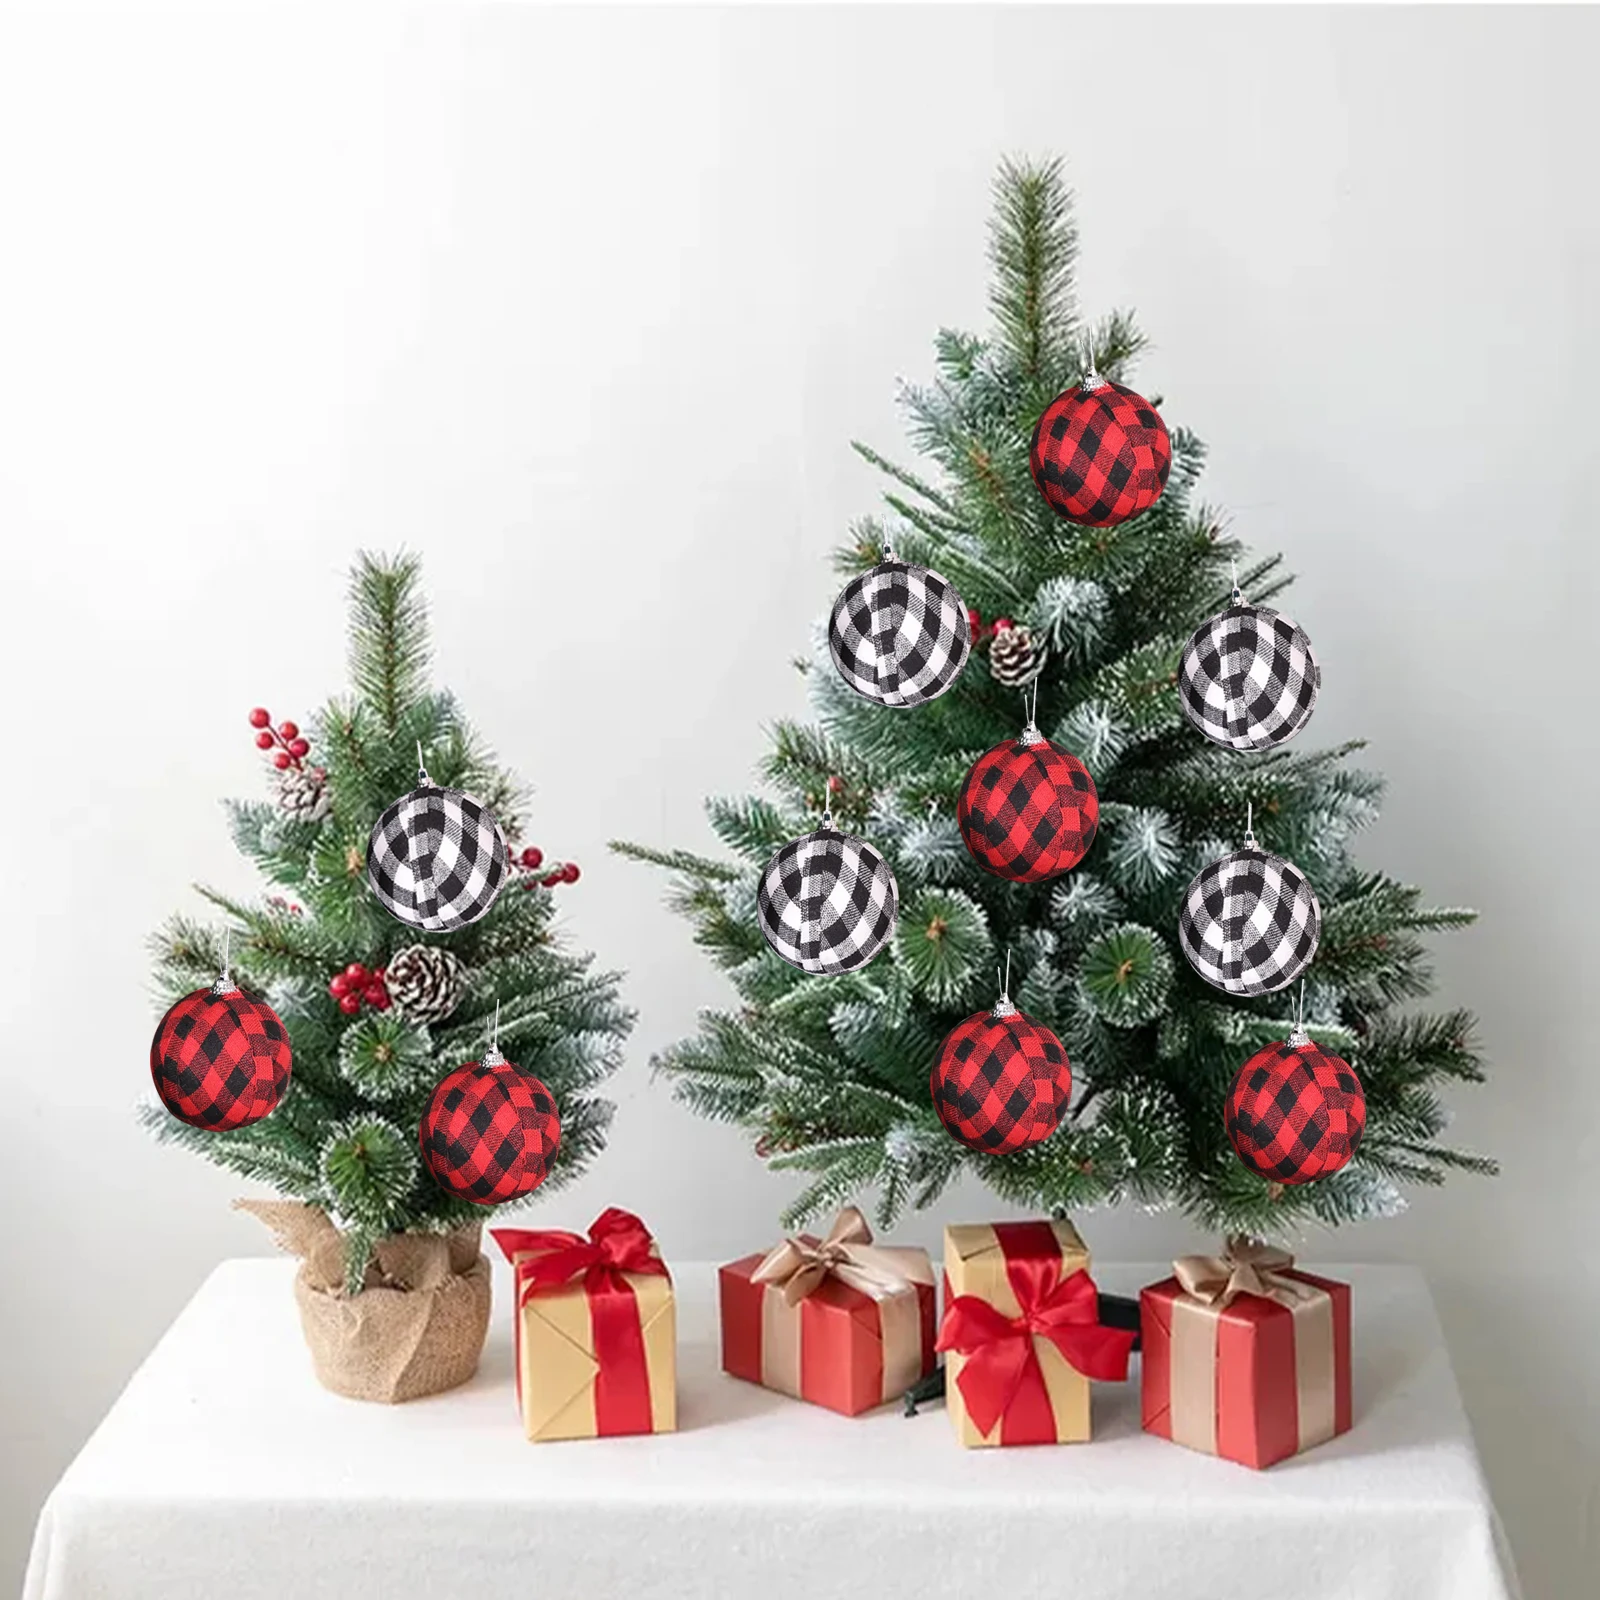 7cm Xmas Ornaments Pendant Red White Black Plaid Christmas Ball Hanging Decoration Crafts Home Festival Party DIY Decor